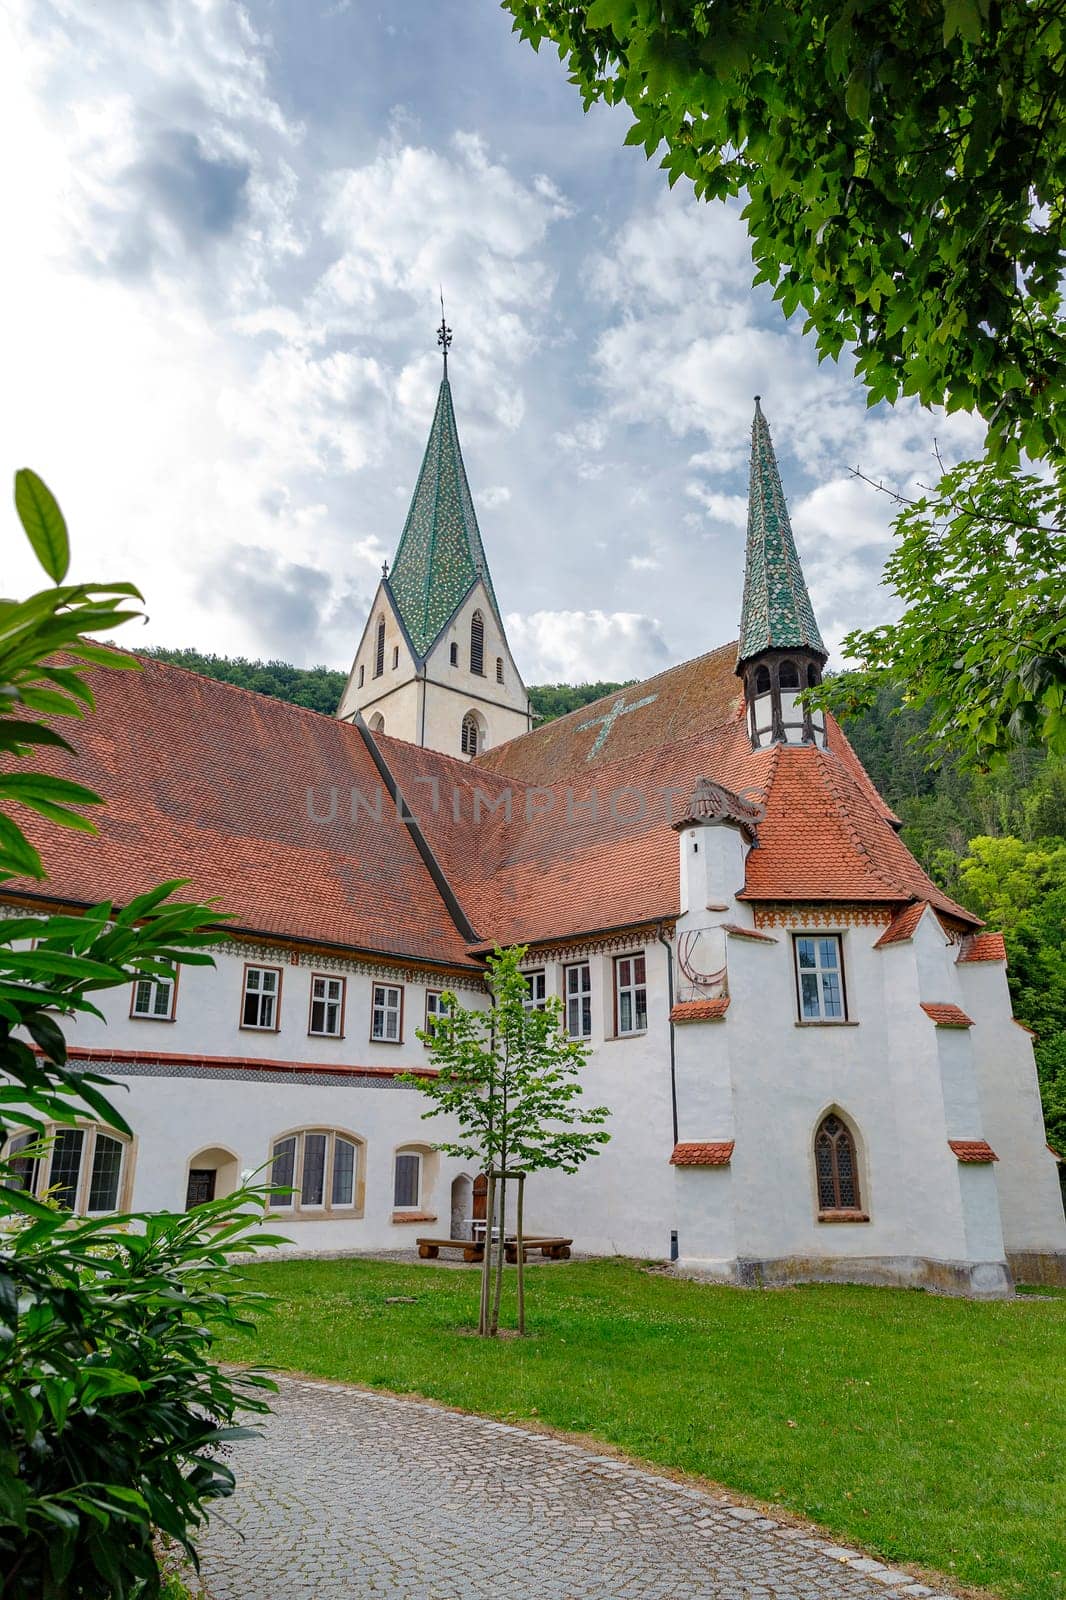 A part of Blaubeuren Abbey in the city of Blaubeuren, Germany